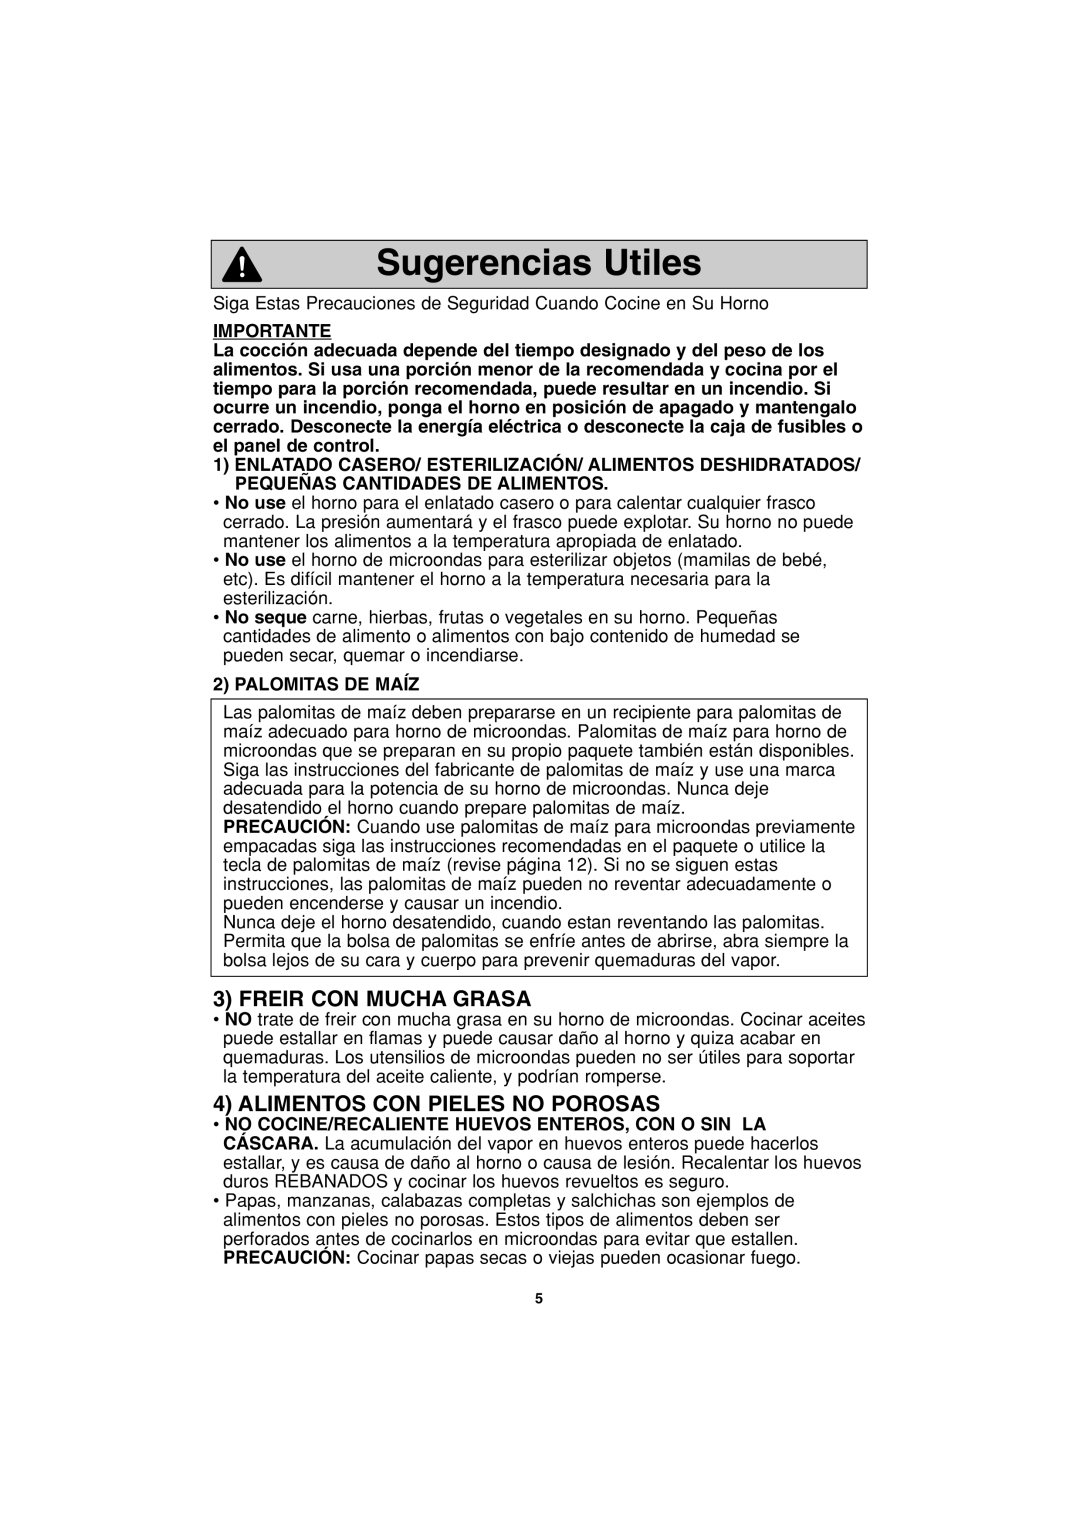 Panasonic NN-S443 important safety instructions Sugerencias Utiles, Freir Con Mucha Grasa, Alimentos Con Pieles No Porosas 